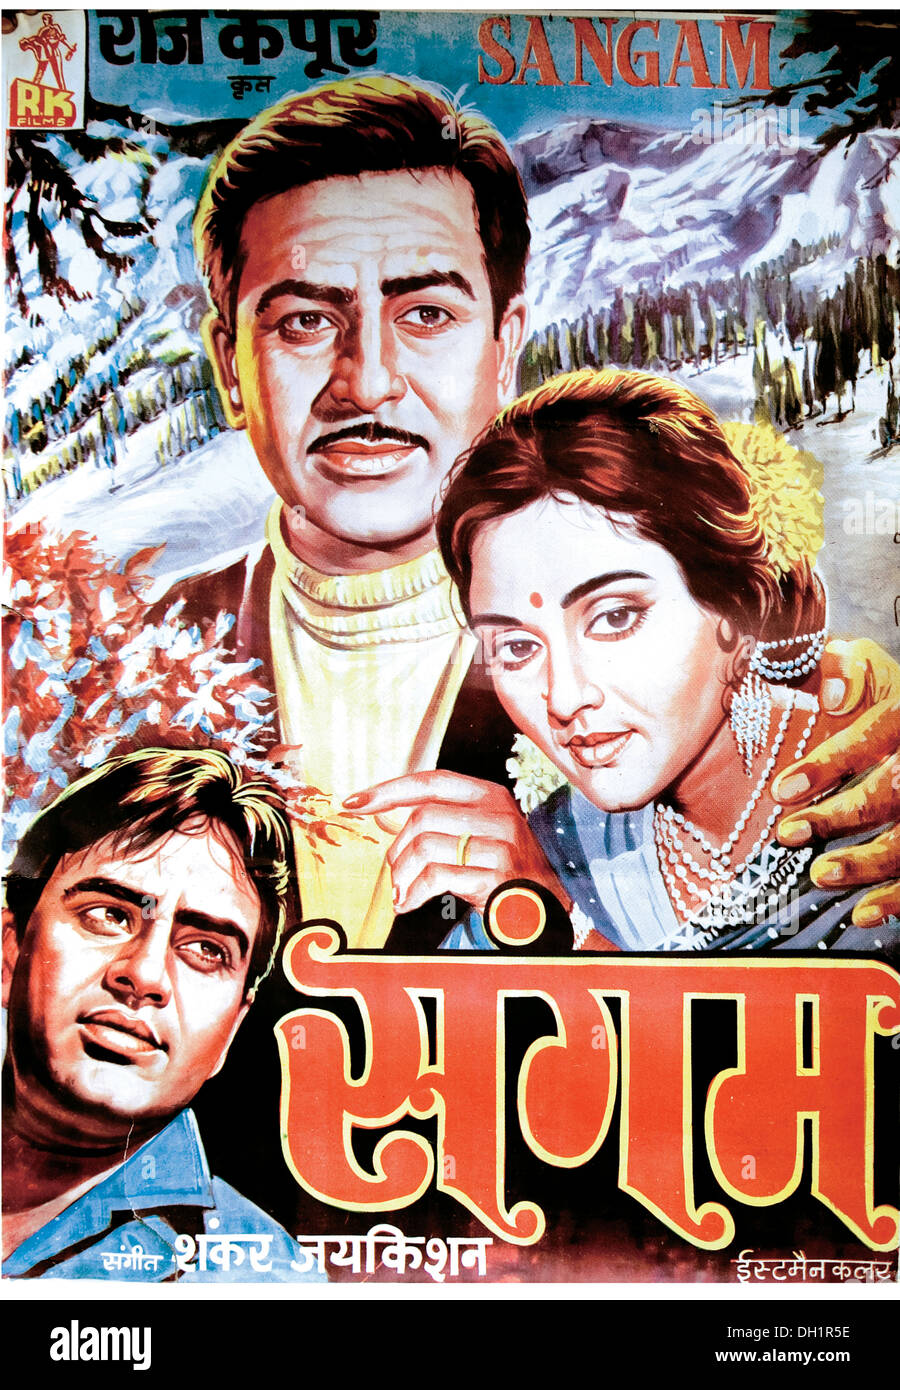 Indian bollywood hindi movie film poster Sangam actor Raj Kapoor Rajendra Kumar actress Vyjayanthimala India Asia Asian Indian films poster old 1900s Stock Photo